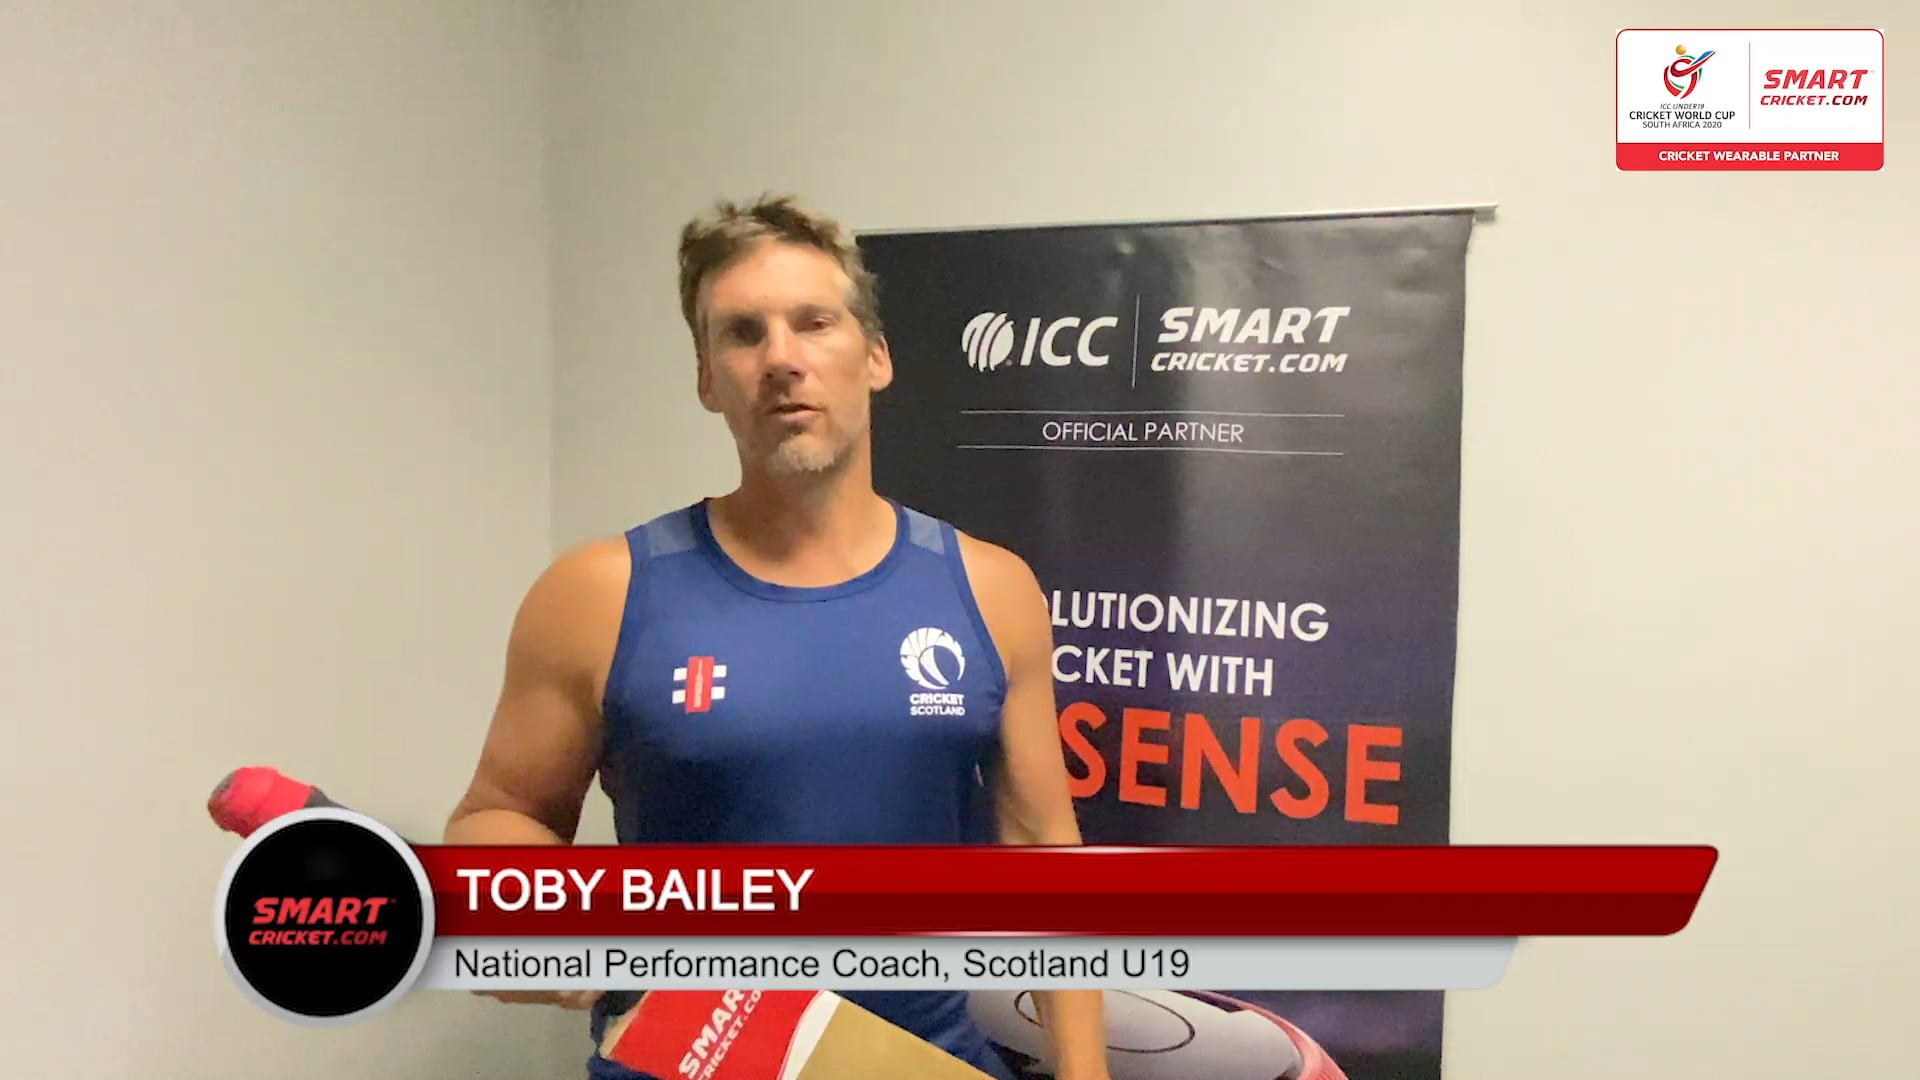 Toby Bailey about BatSense - National Performance Coach